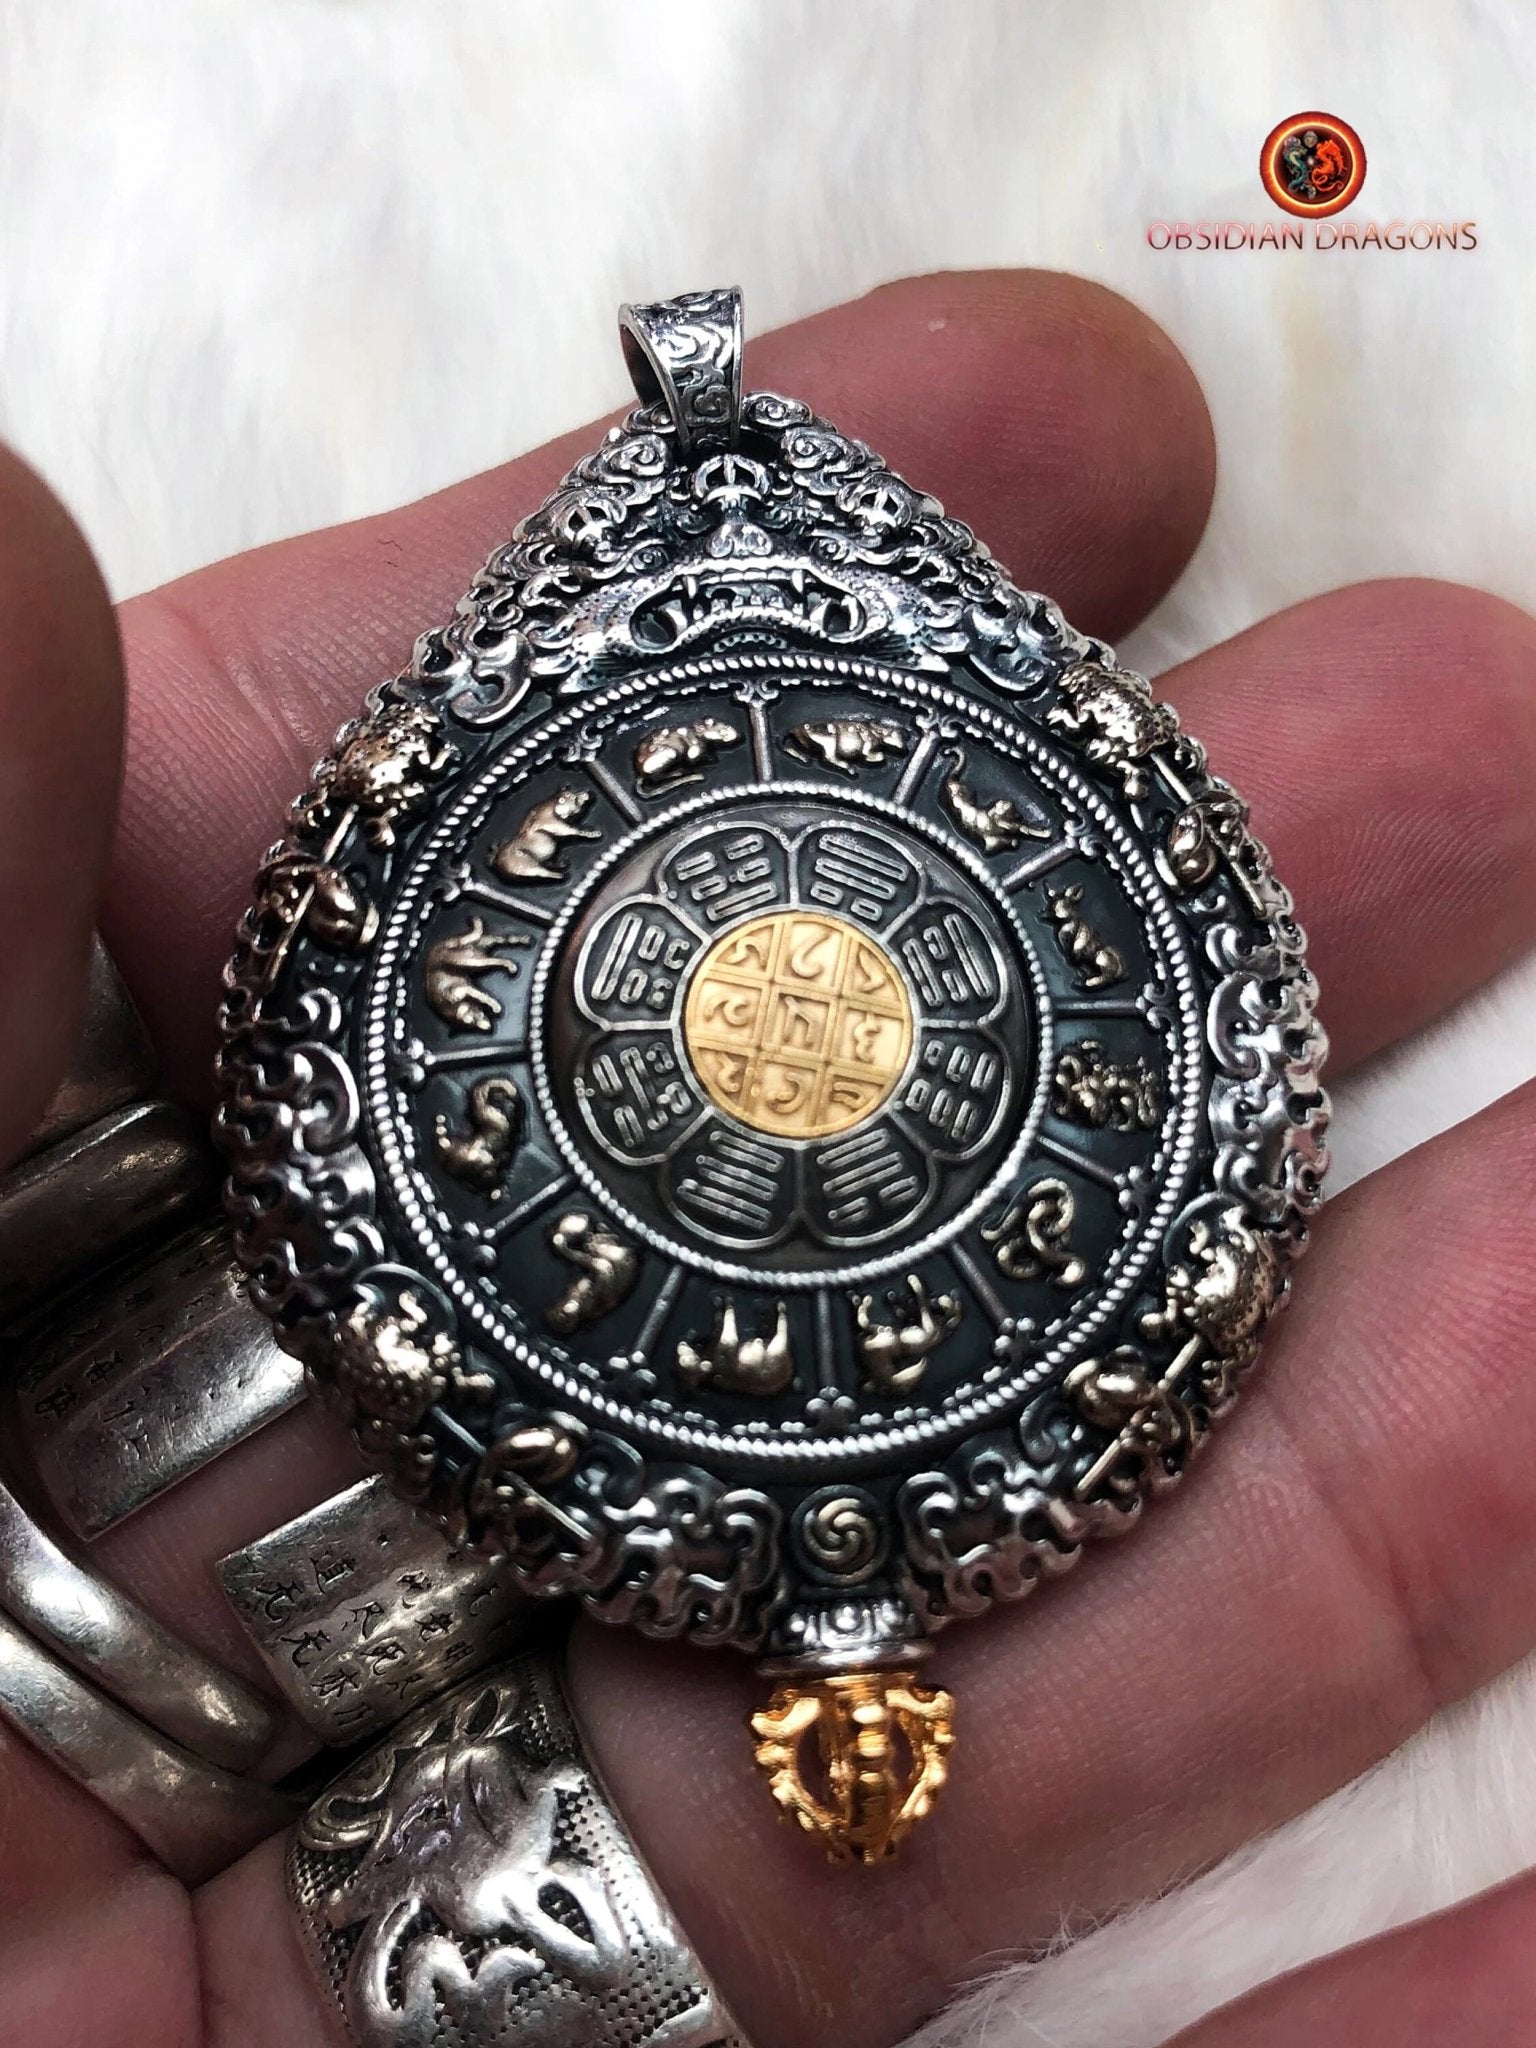 pendentif bouddha. protection d' Amitabha. Authentique ghau avec tangka peint sur or. Amulette bouddhiste vajrayana - obsidian dragon